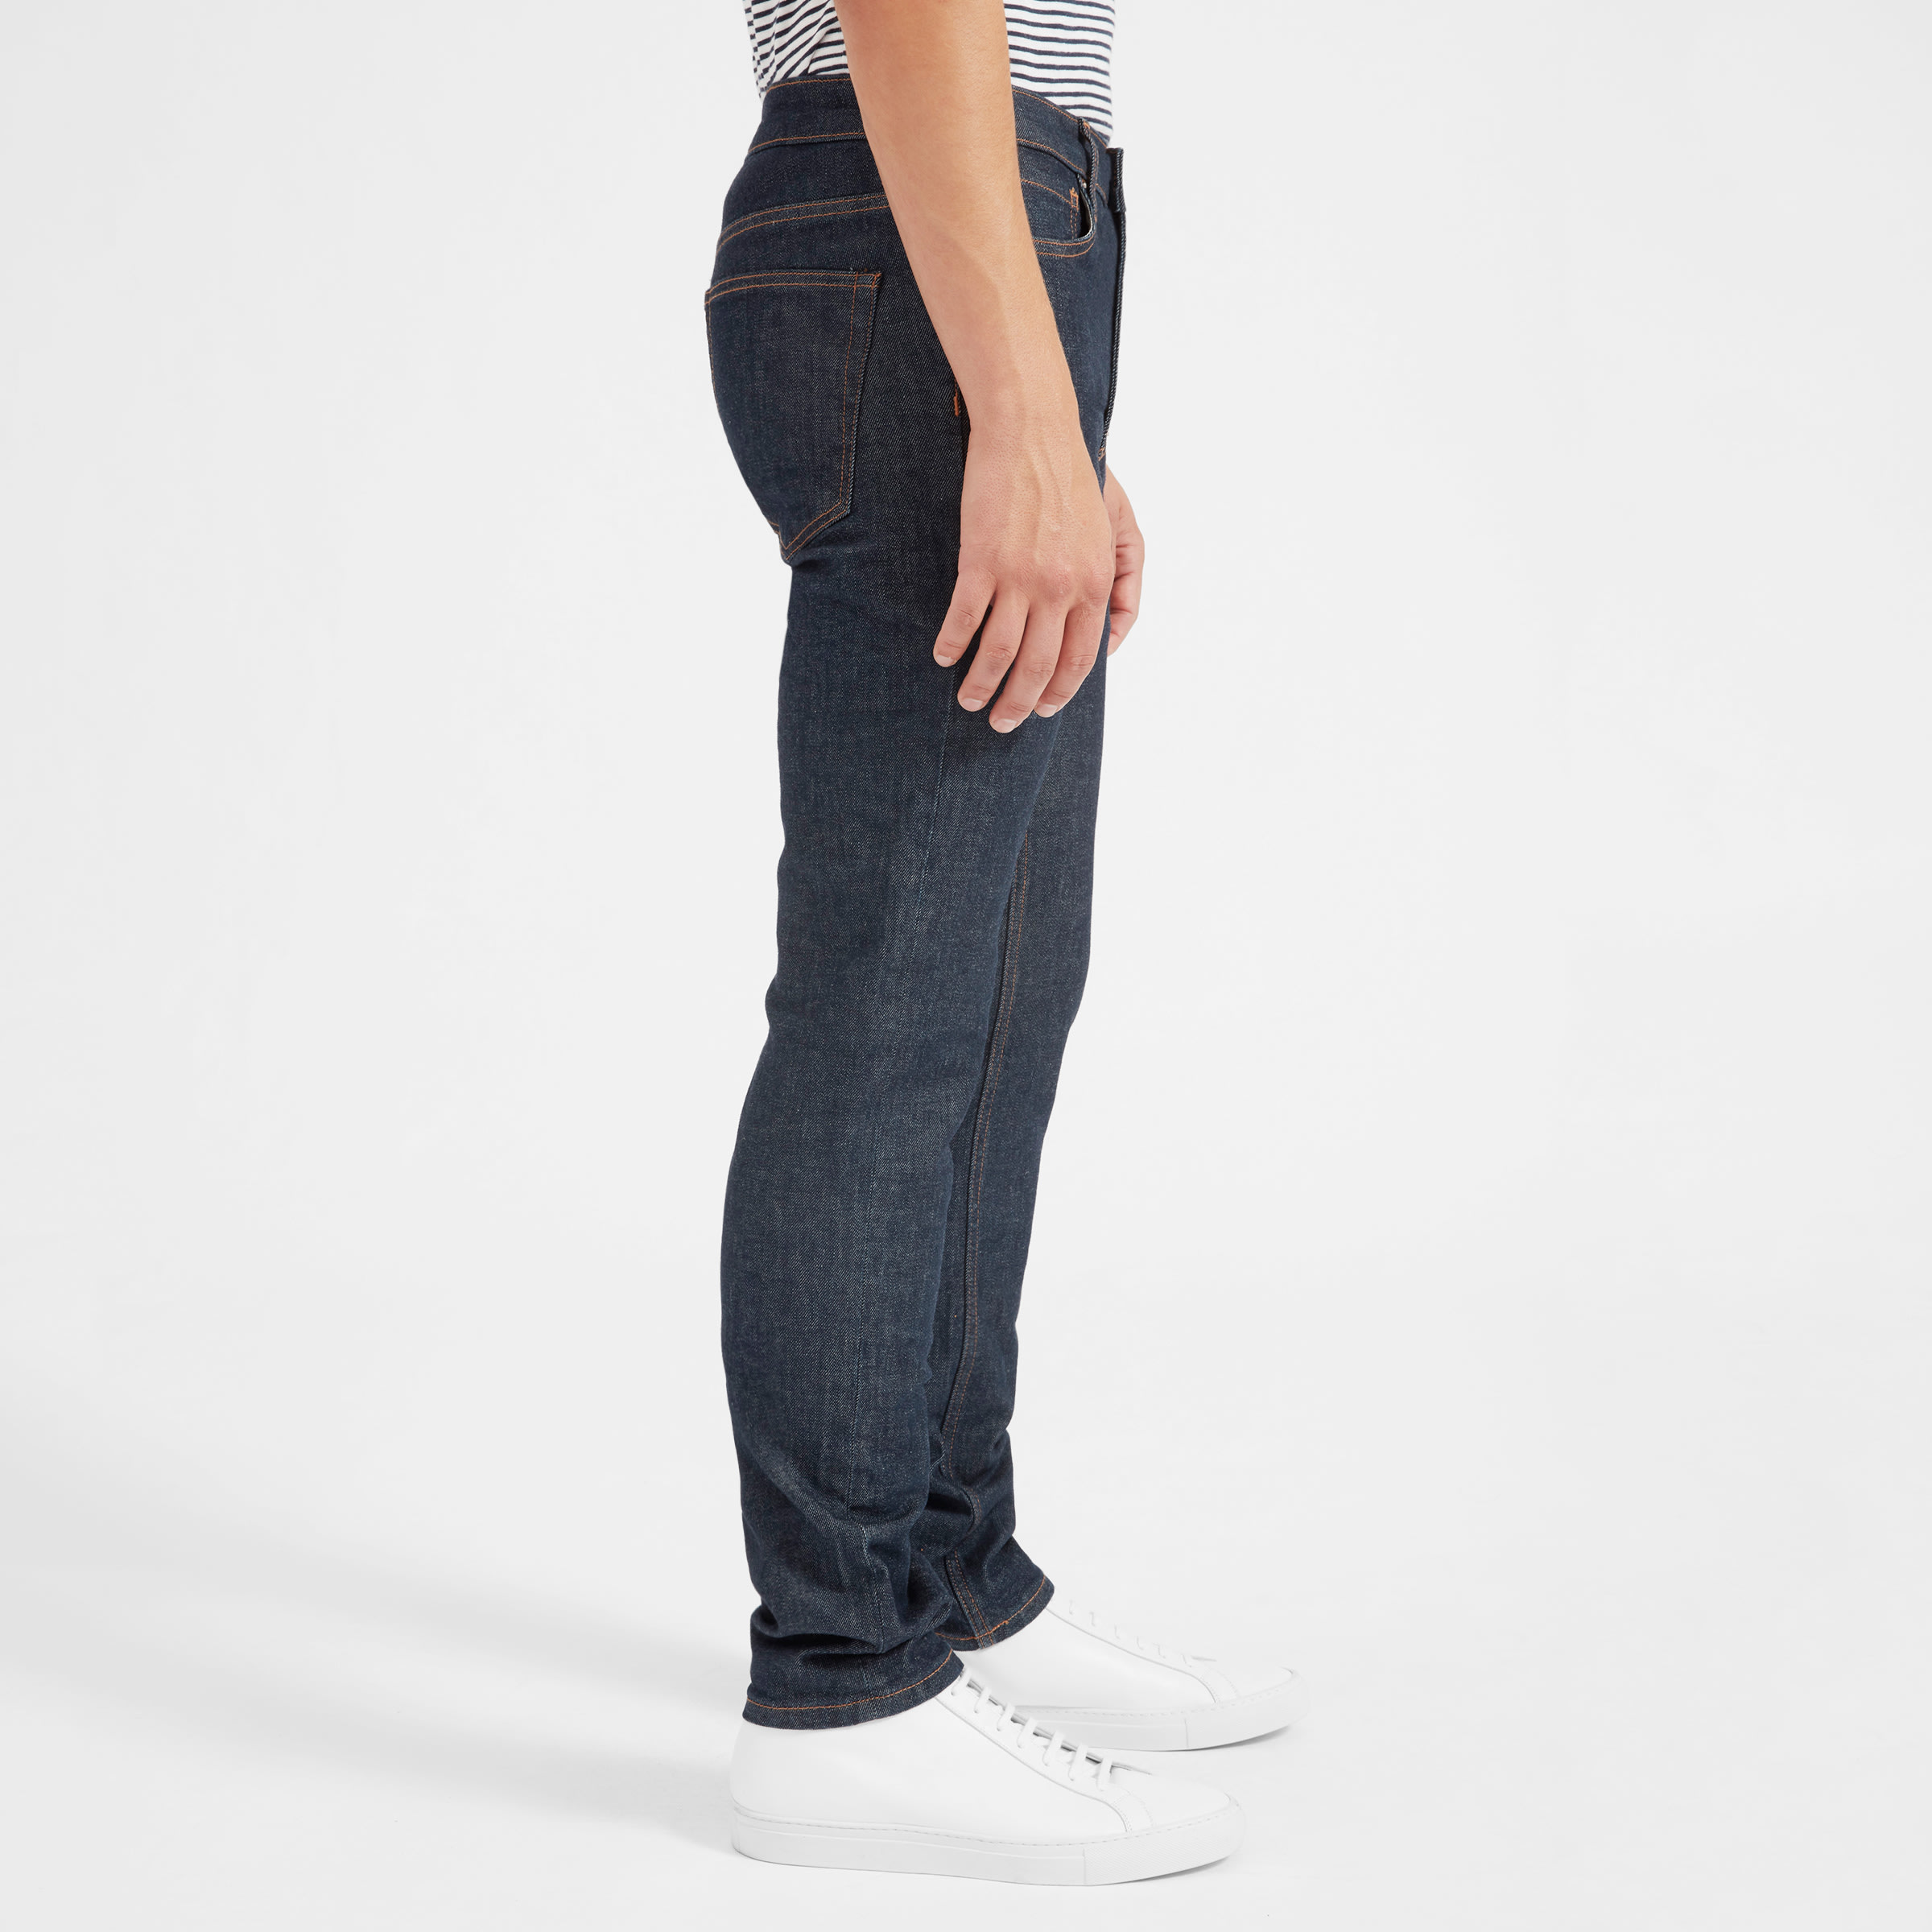 everlane skinny jeans mens